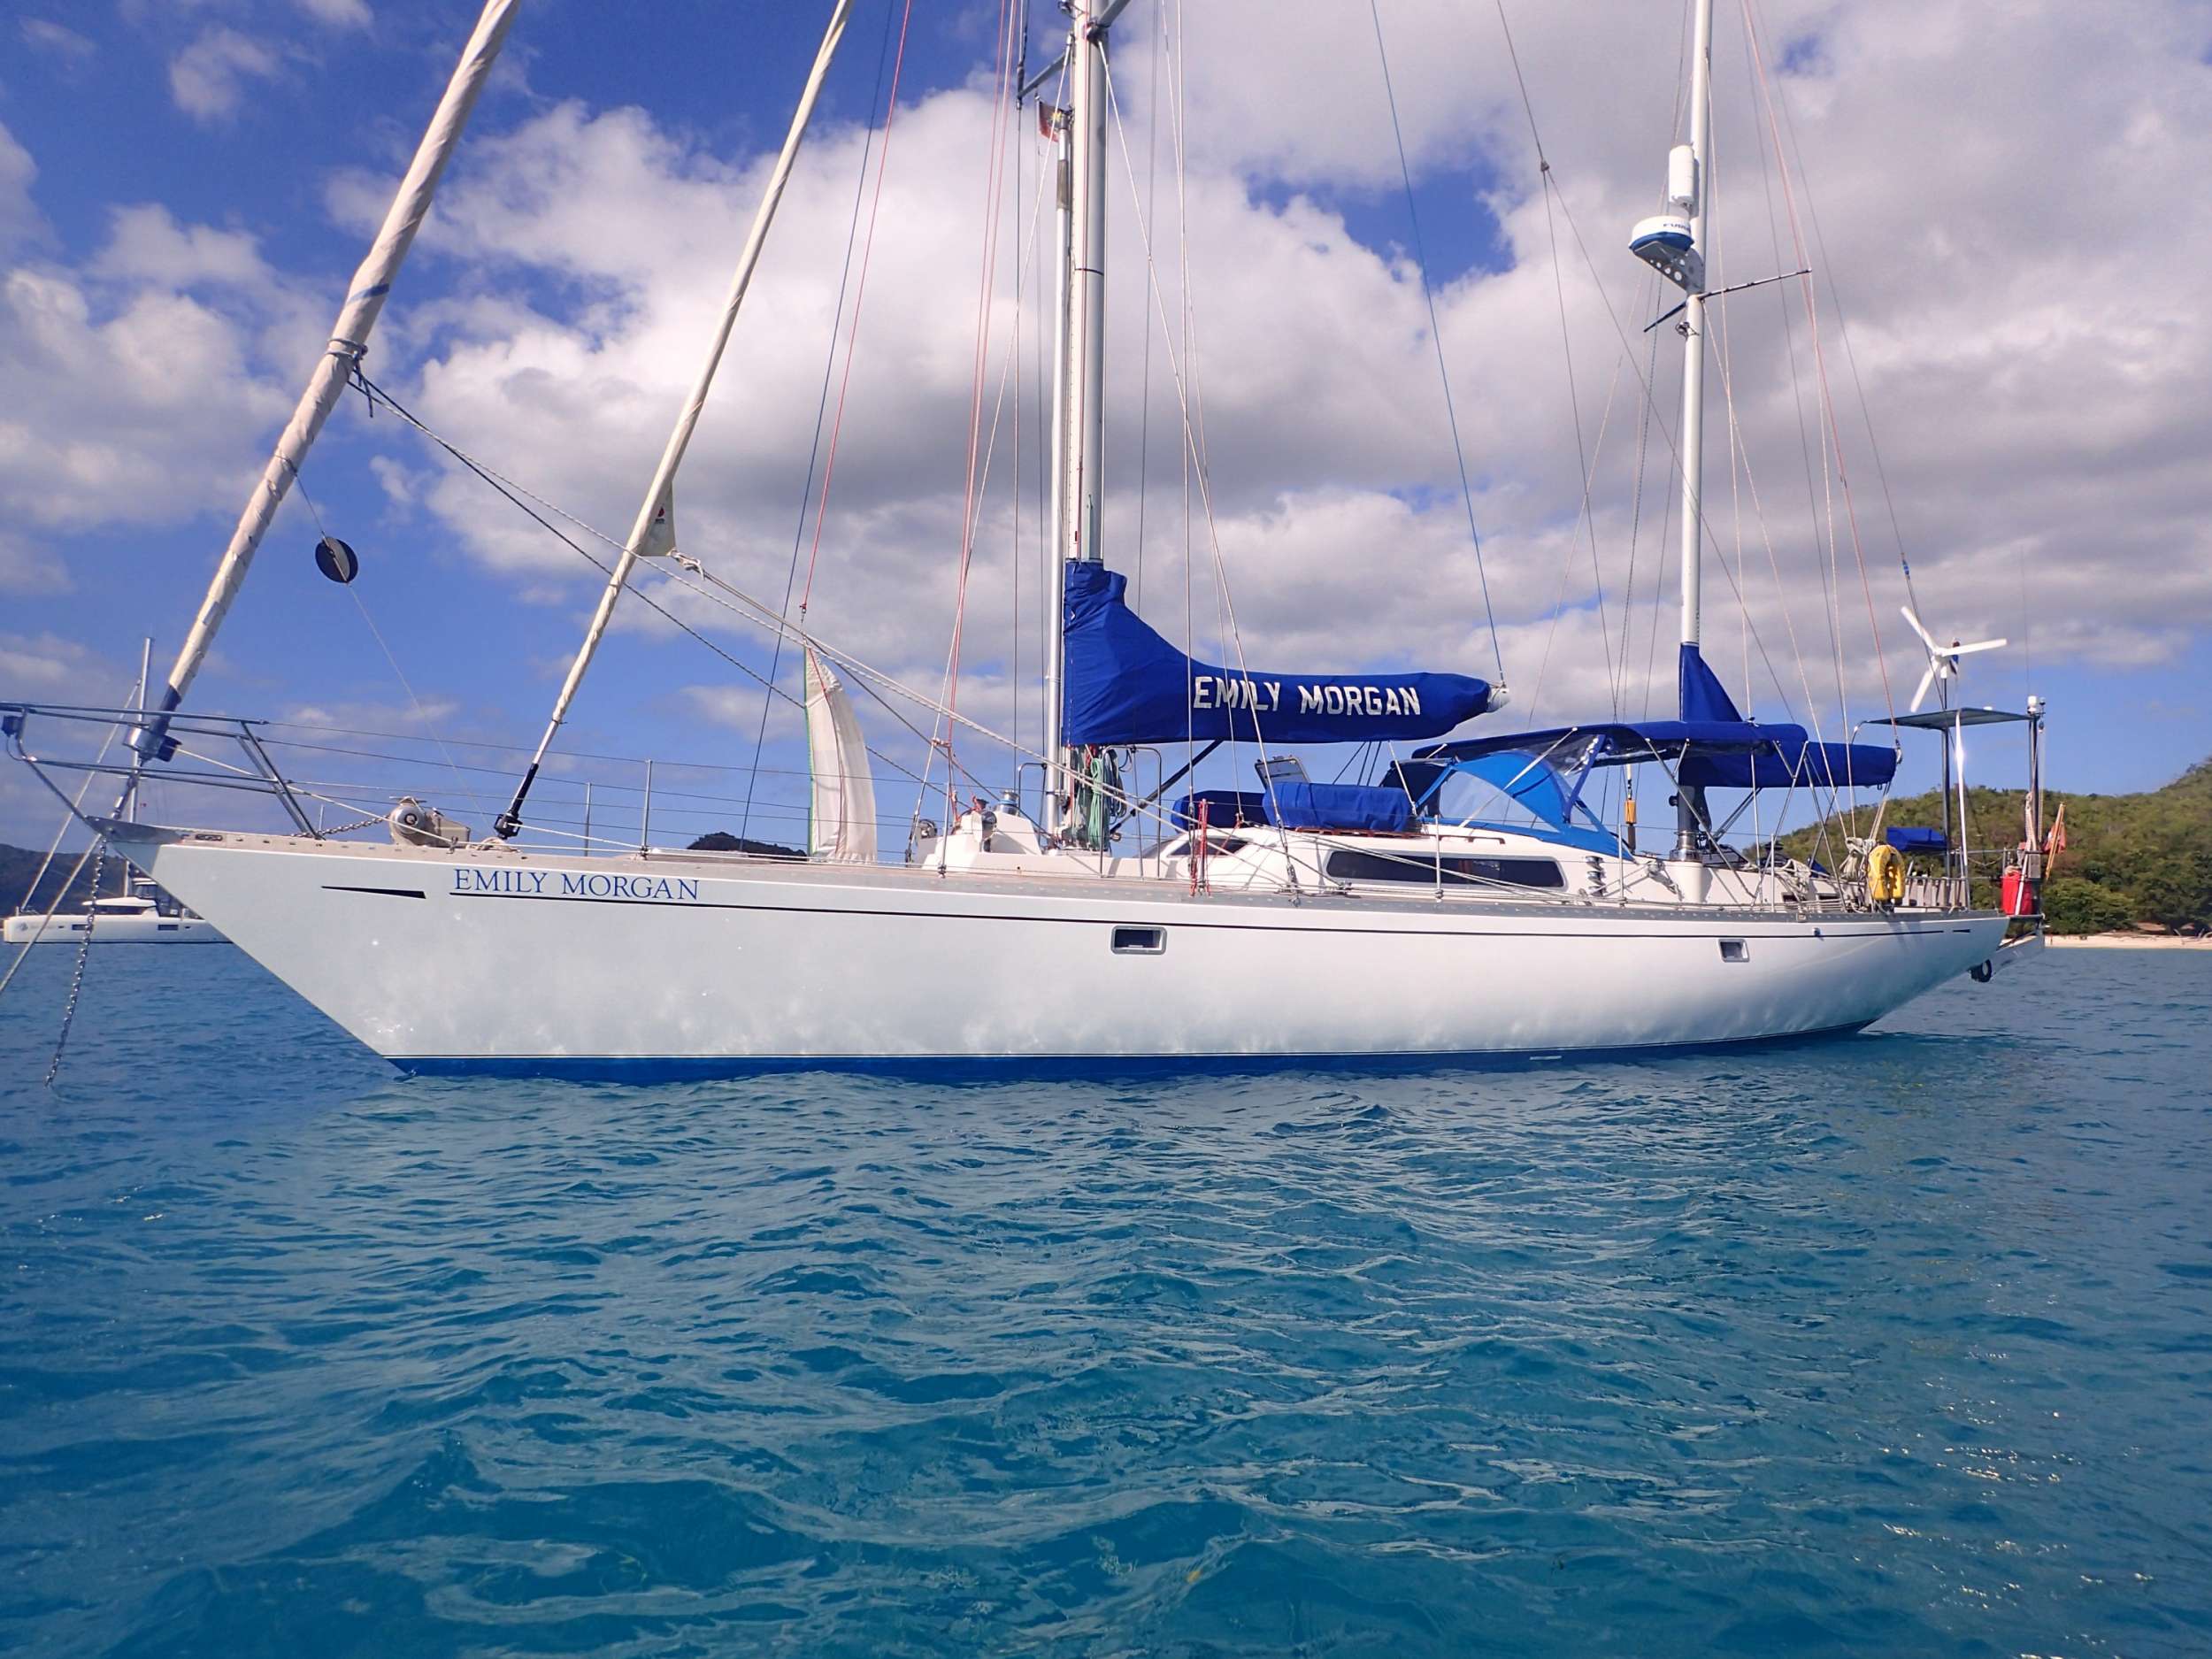 emily morgan - Yacht Charter Oslo & Boat hire in Northern EU, Caribbean 1